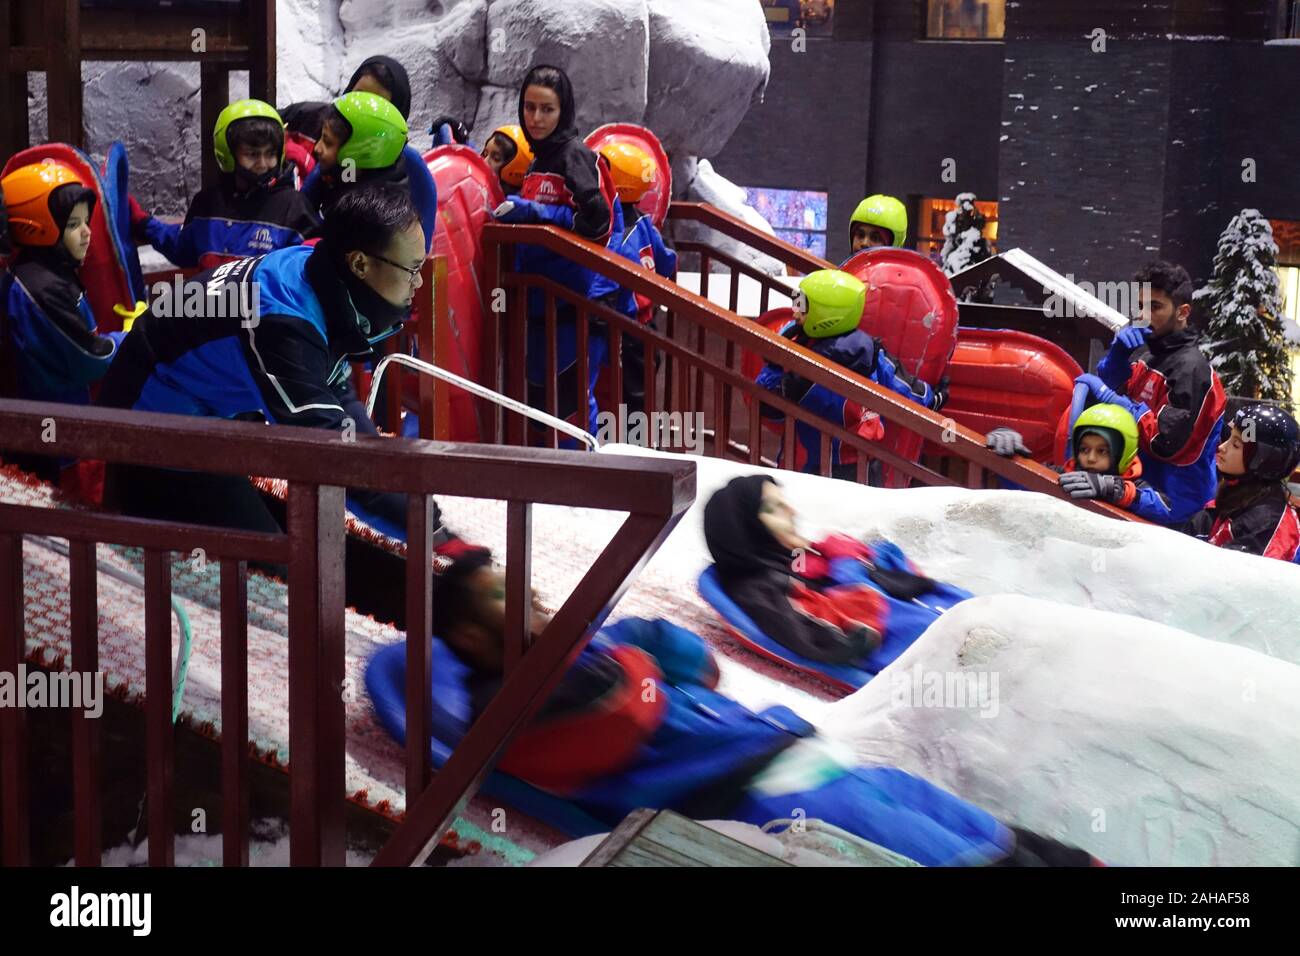 29.03.2018, Dubai, , United Arab Emirates - People queue up at the slide in the indoor ski hall Ski Dubai. 00S180329D312CAROEX.JPG [MODEL RELEASE: NO, Stock Photo